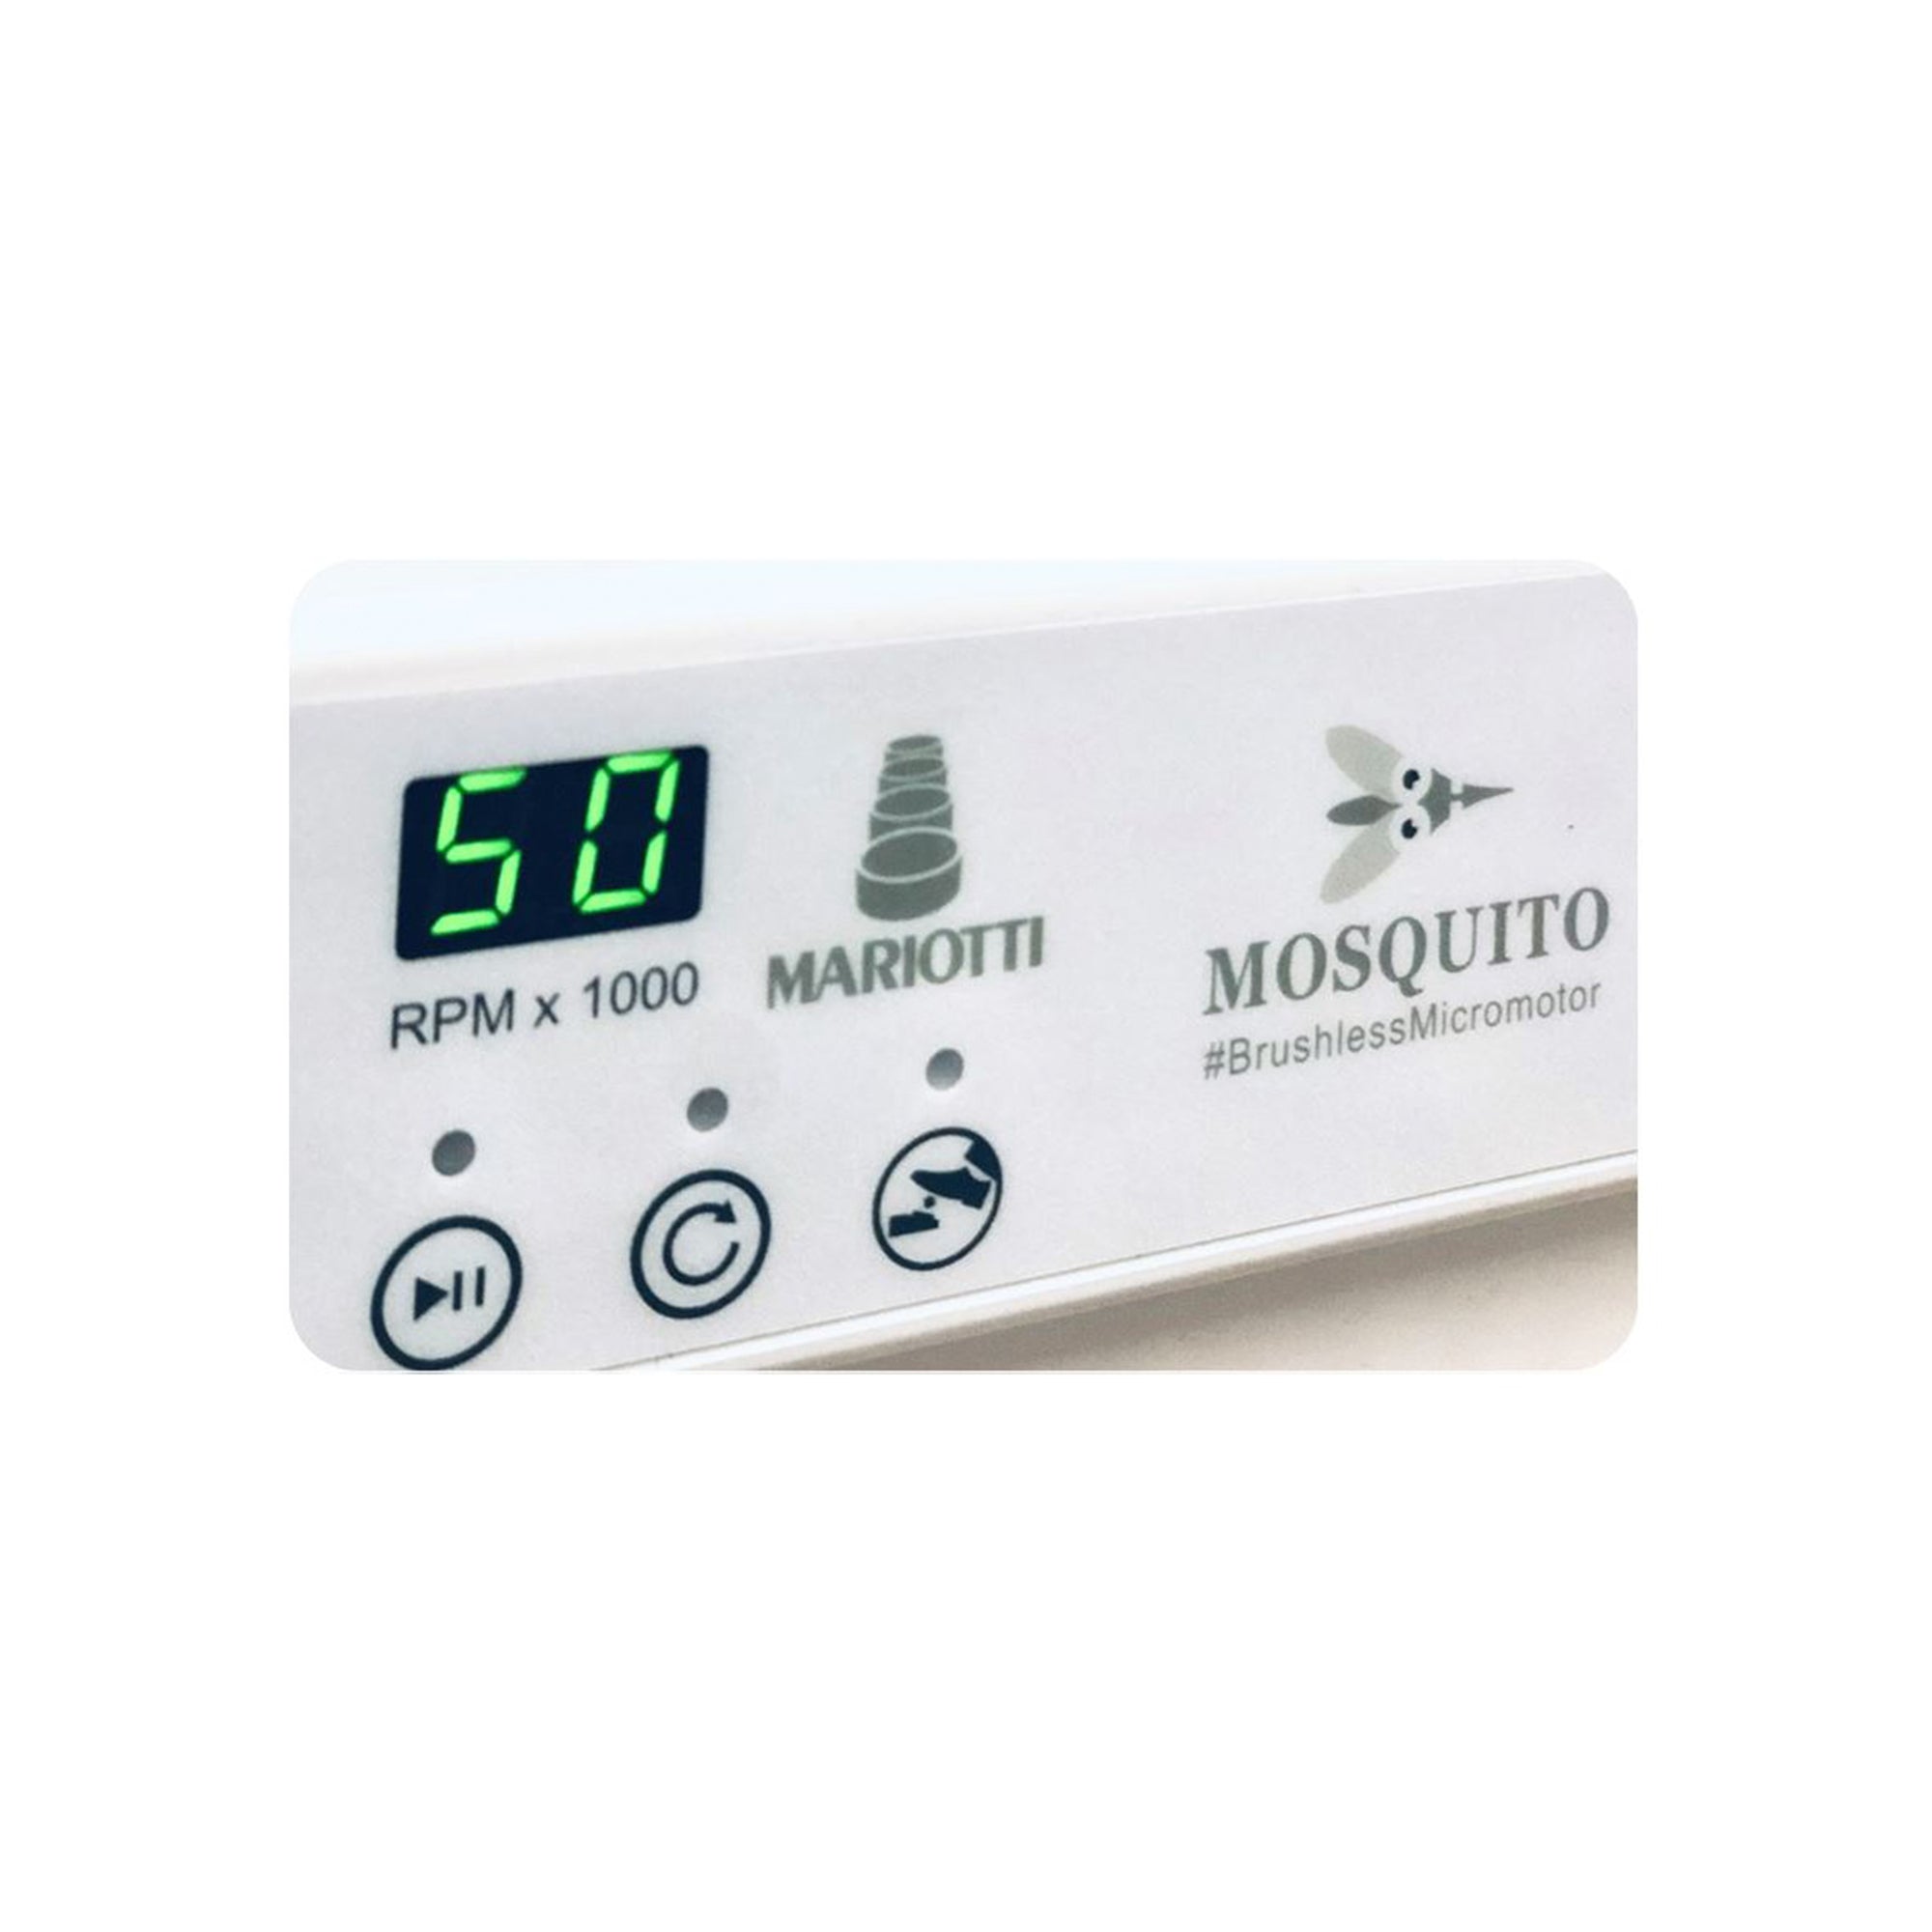 Mariotti Mosquito Brushless Handpiece Micromotor 50000 RPM